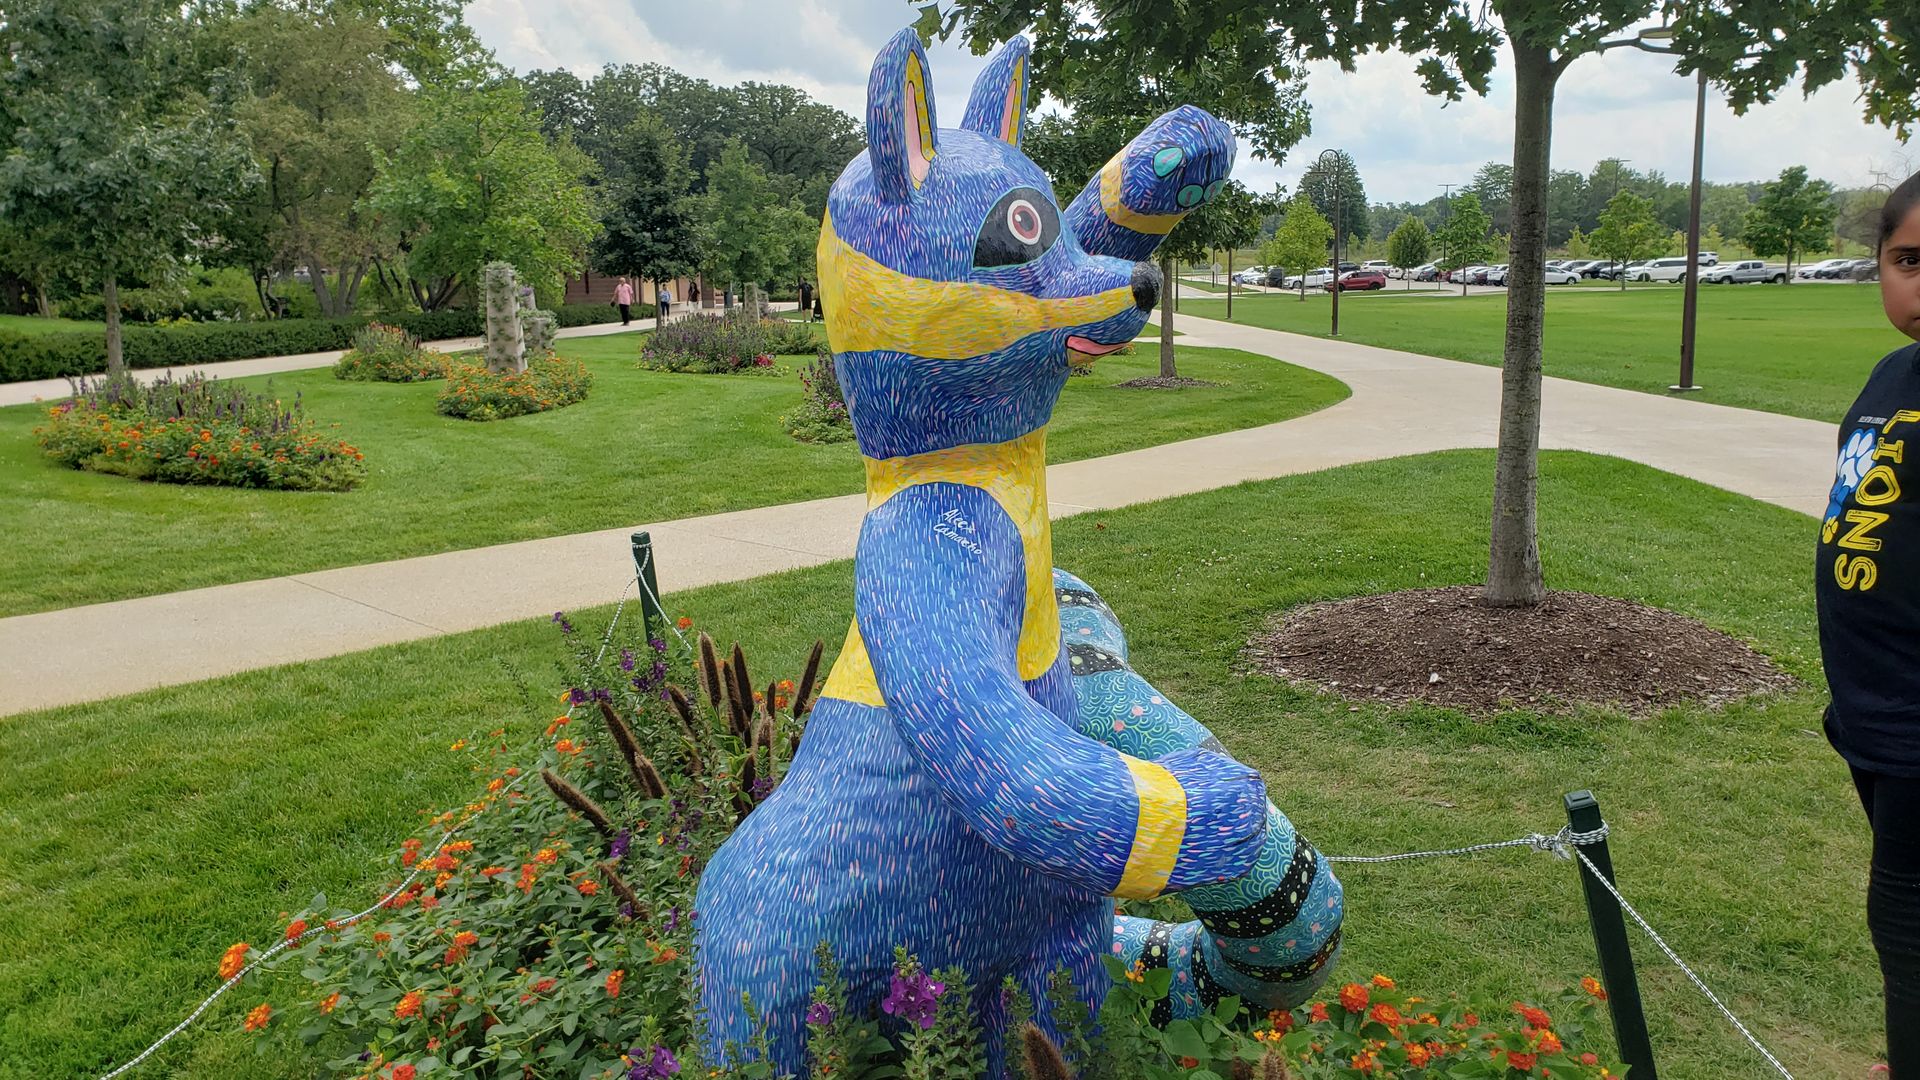 A colorful animal sculpture in a garden